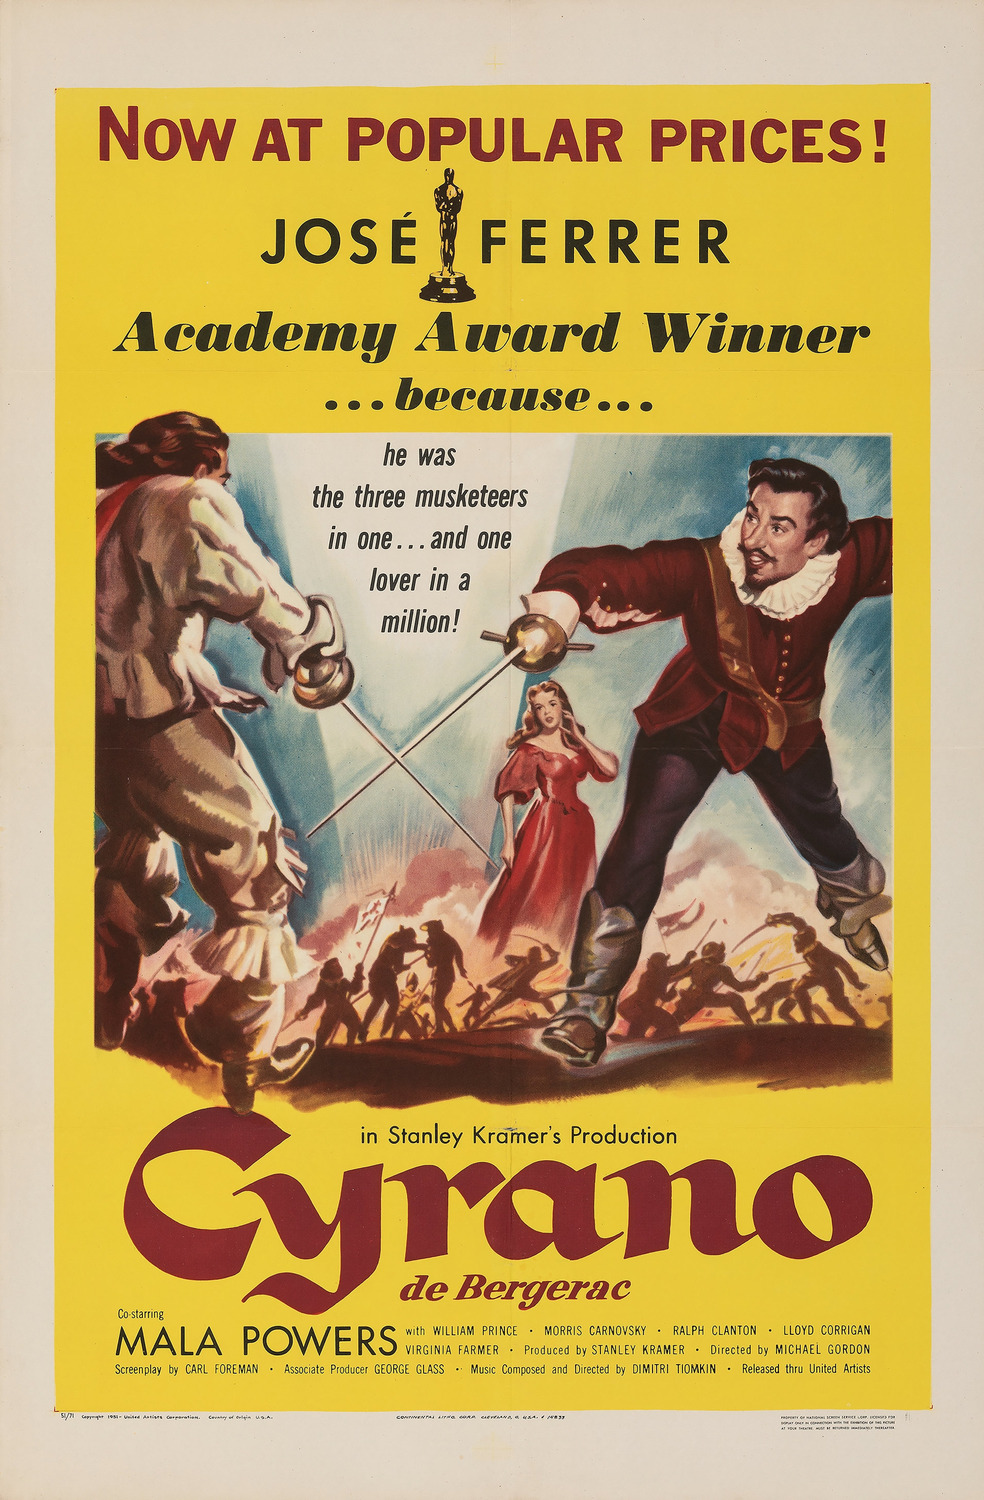 Extra Large Movie Poster Image for Cyrano de Bergerac 